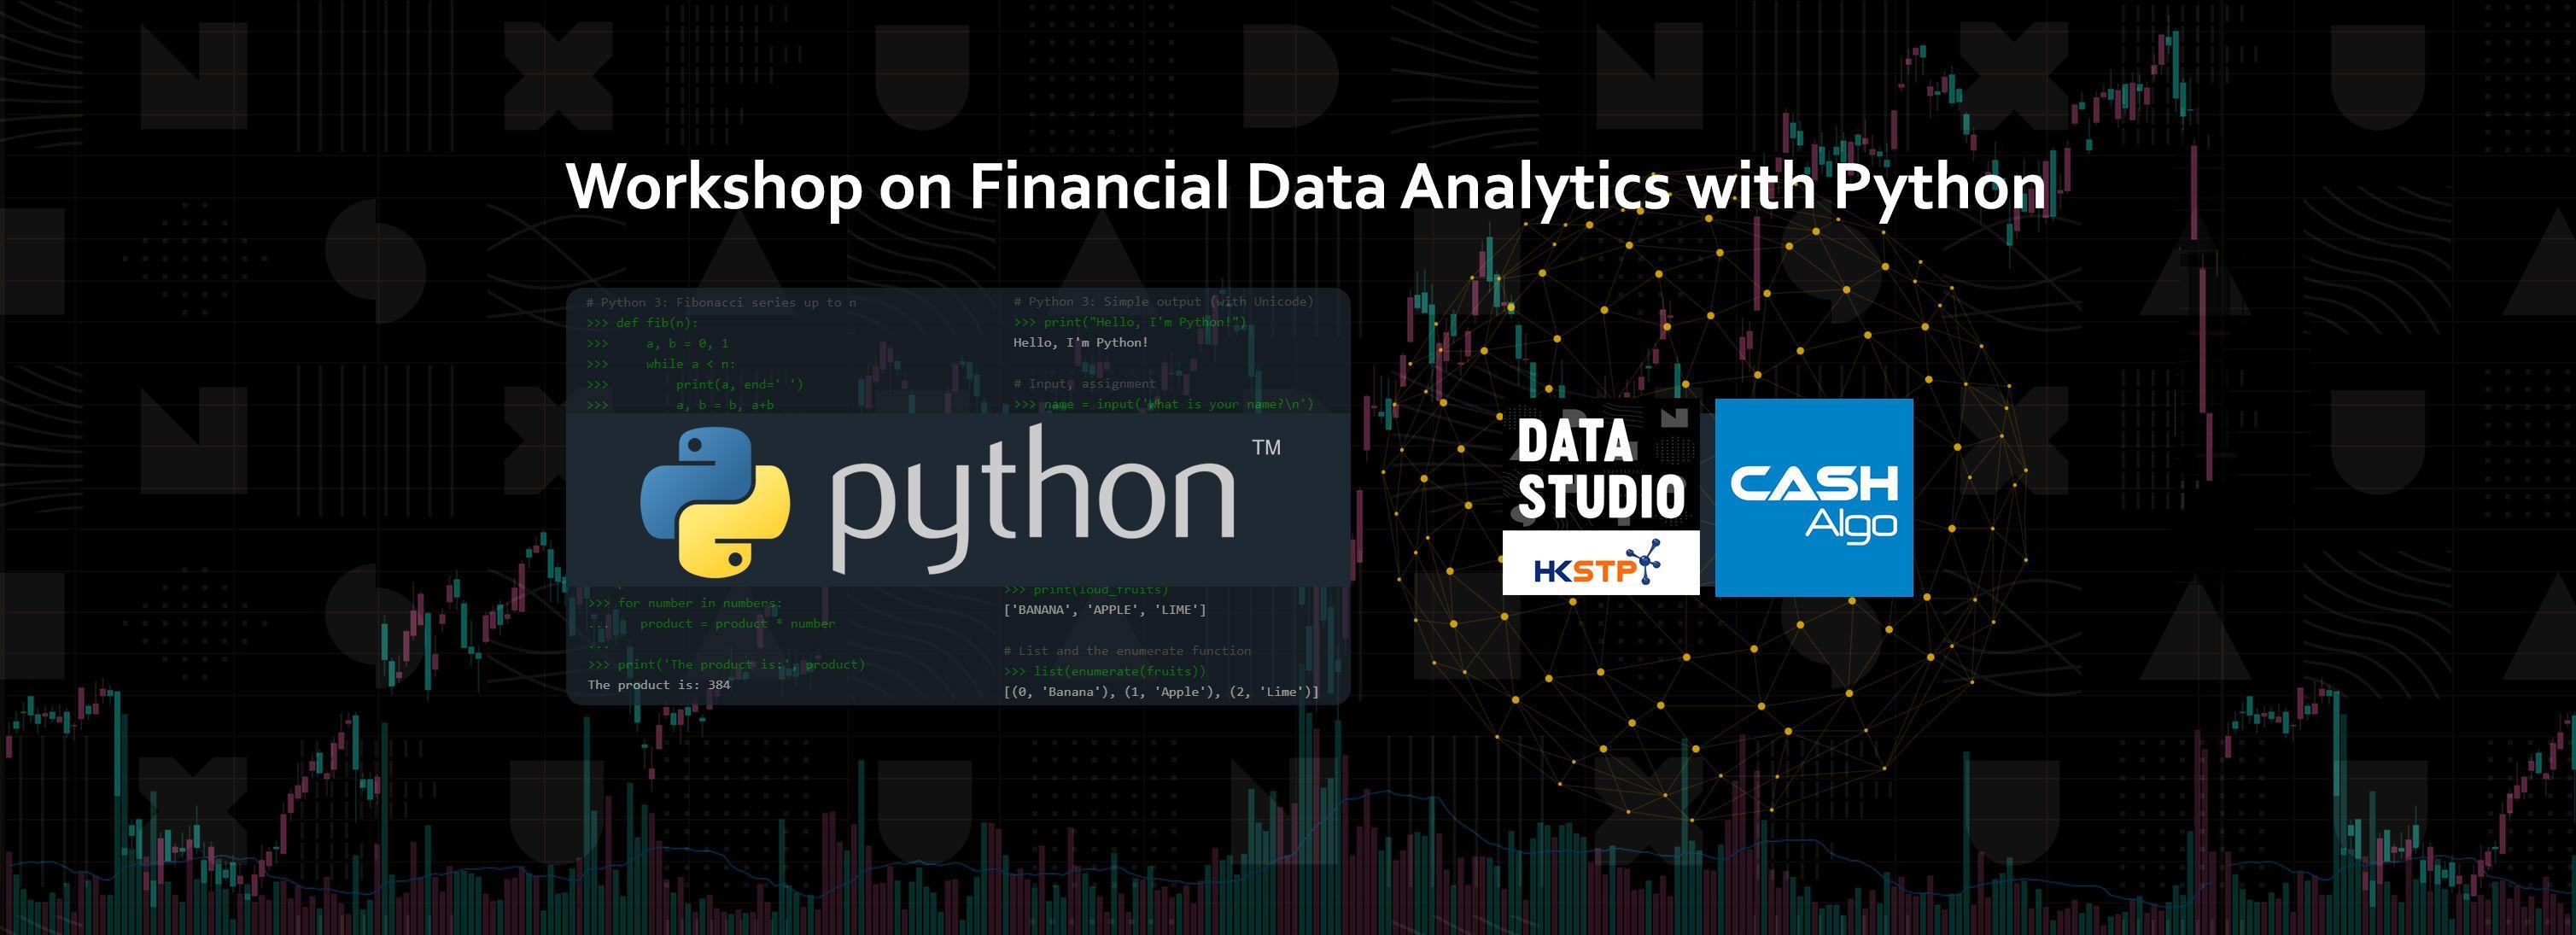 Python Sports Logo - Data Studio @ Science Park | Workshop on Financial Data Analytics ...